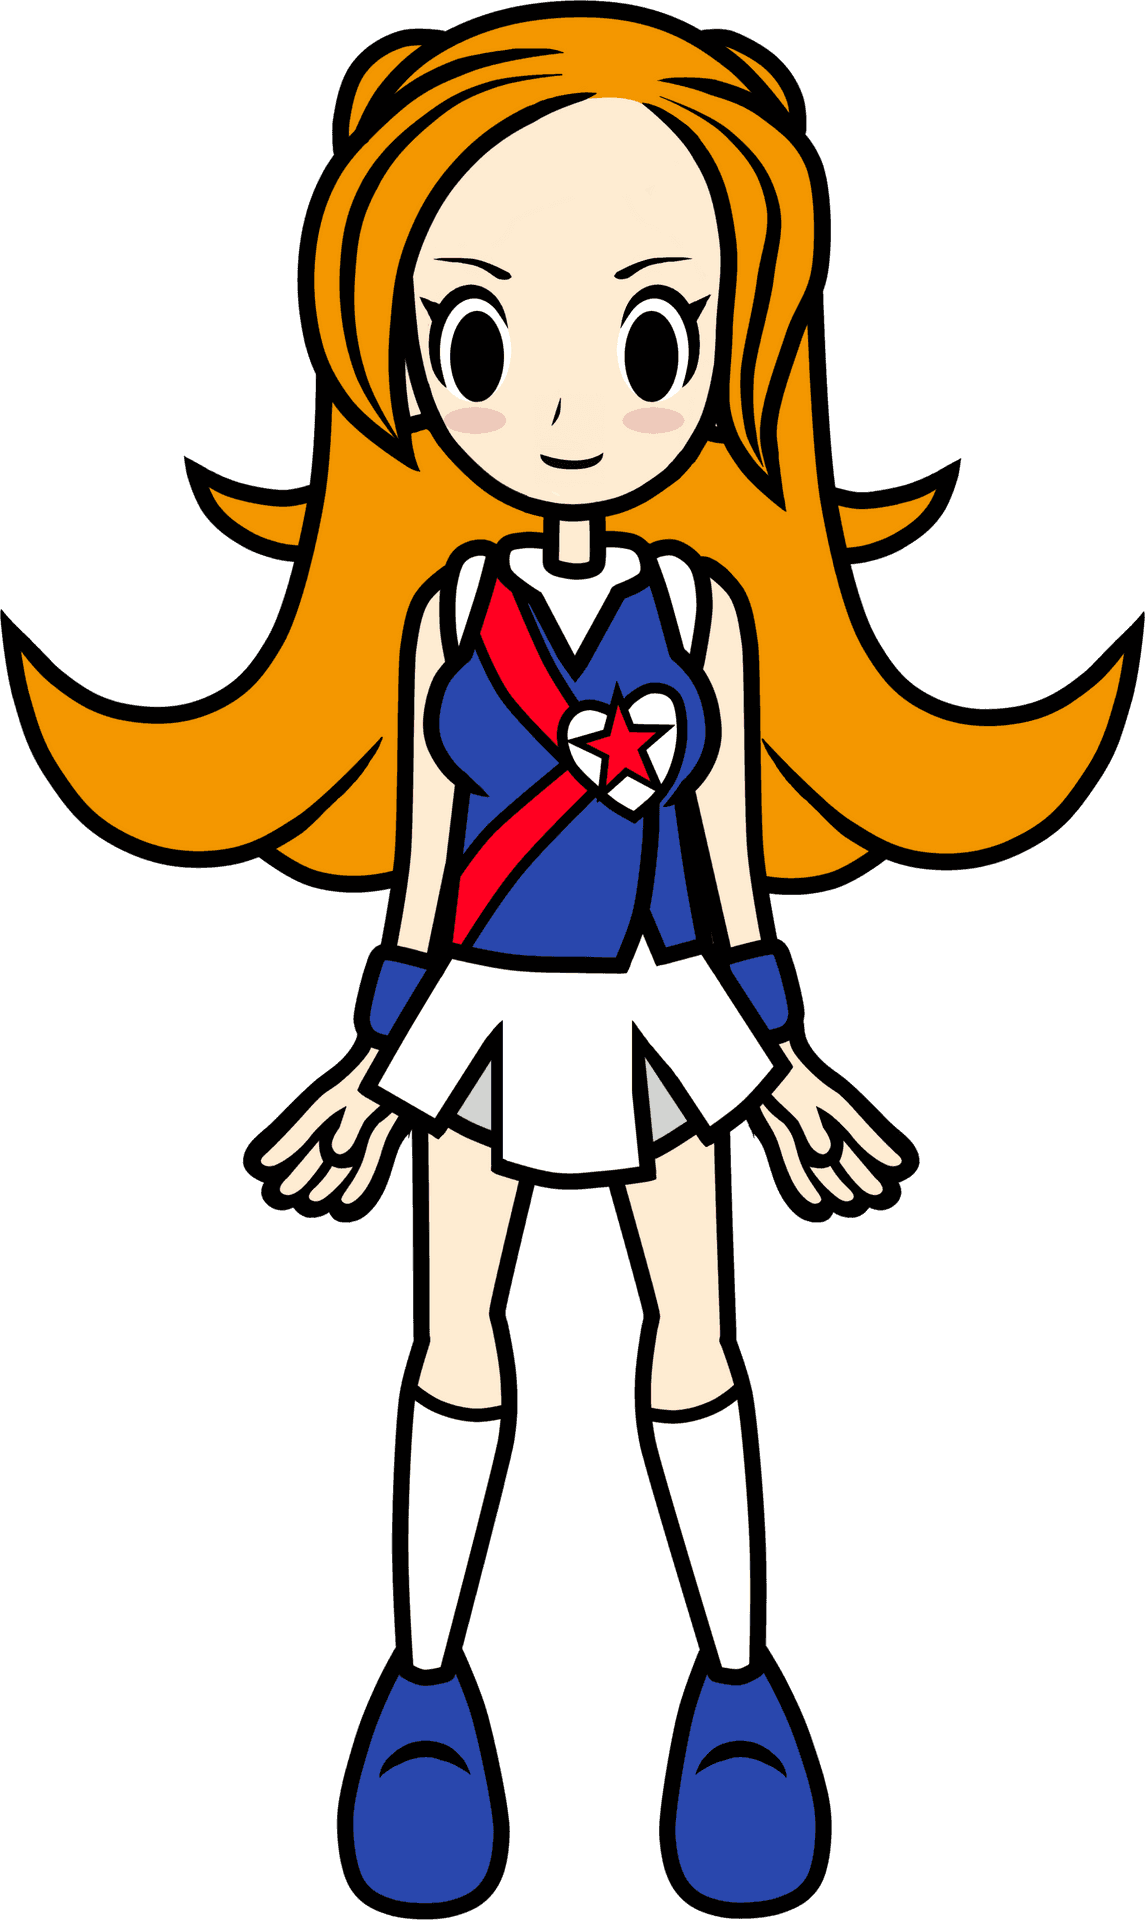 Animated Cheerleader Character PNG